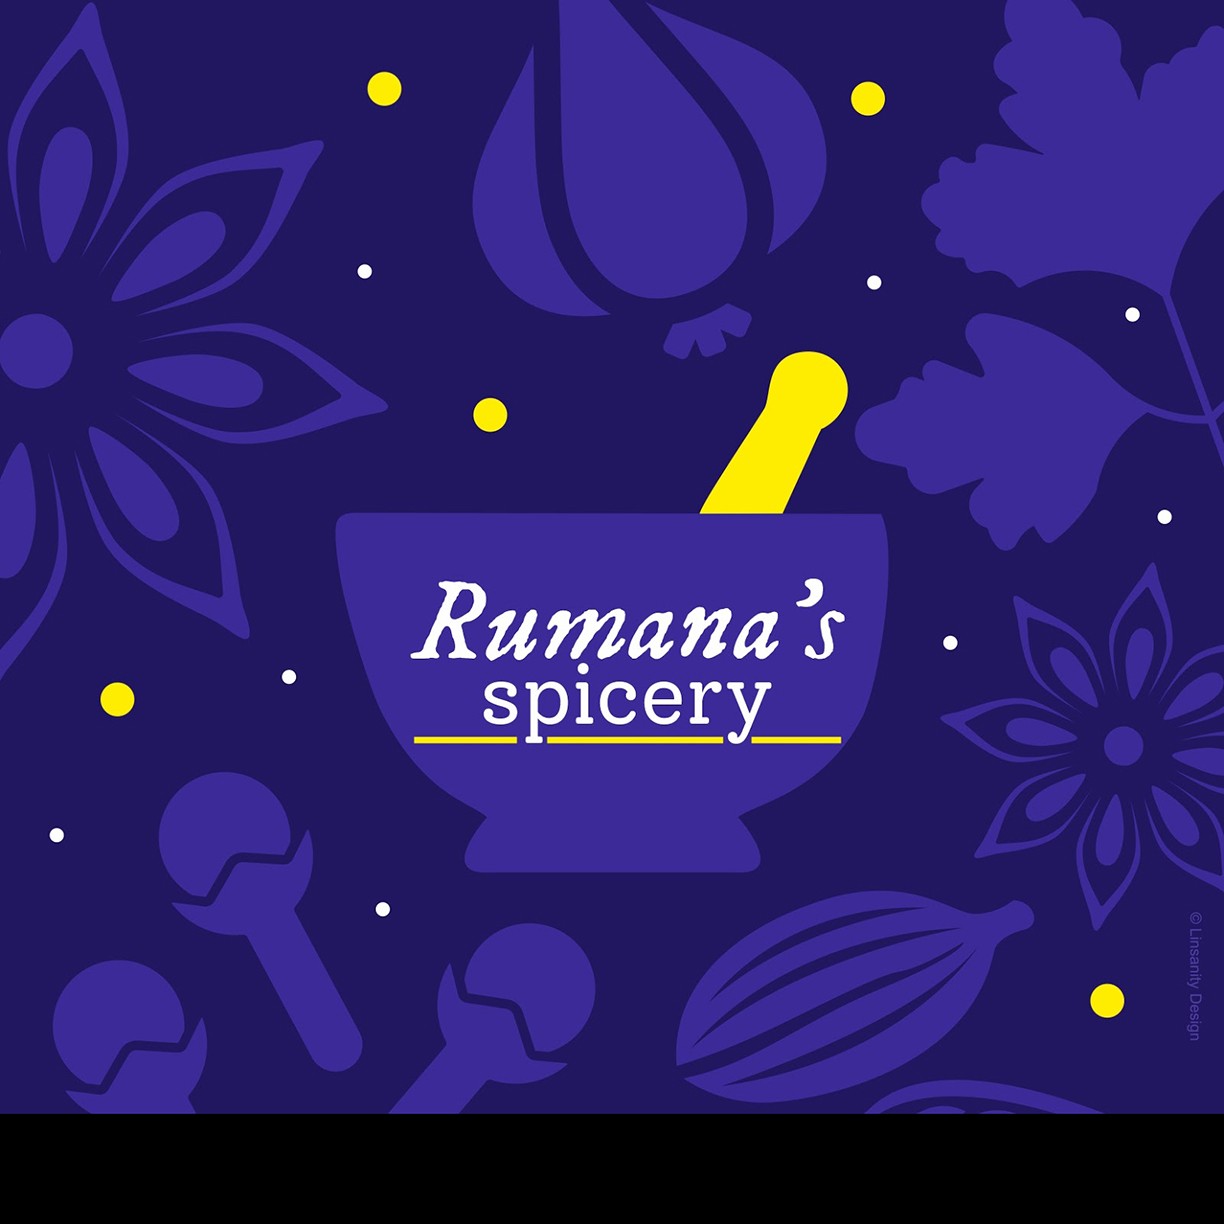 Rumanas-spicery_Linsanity-design-01.jpg